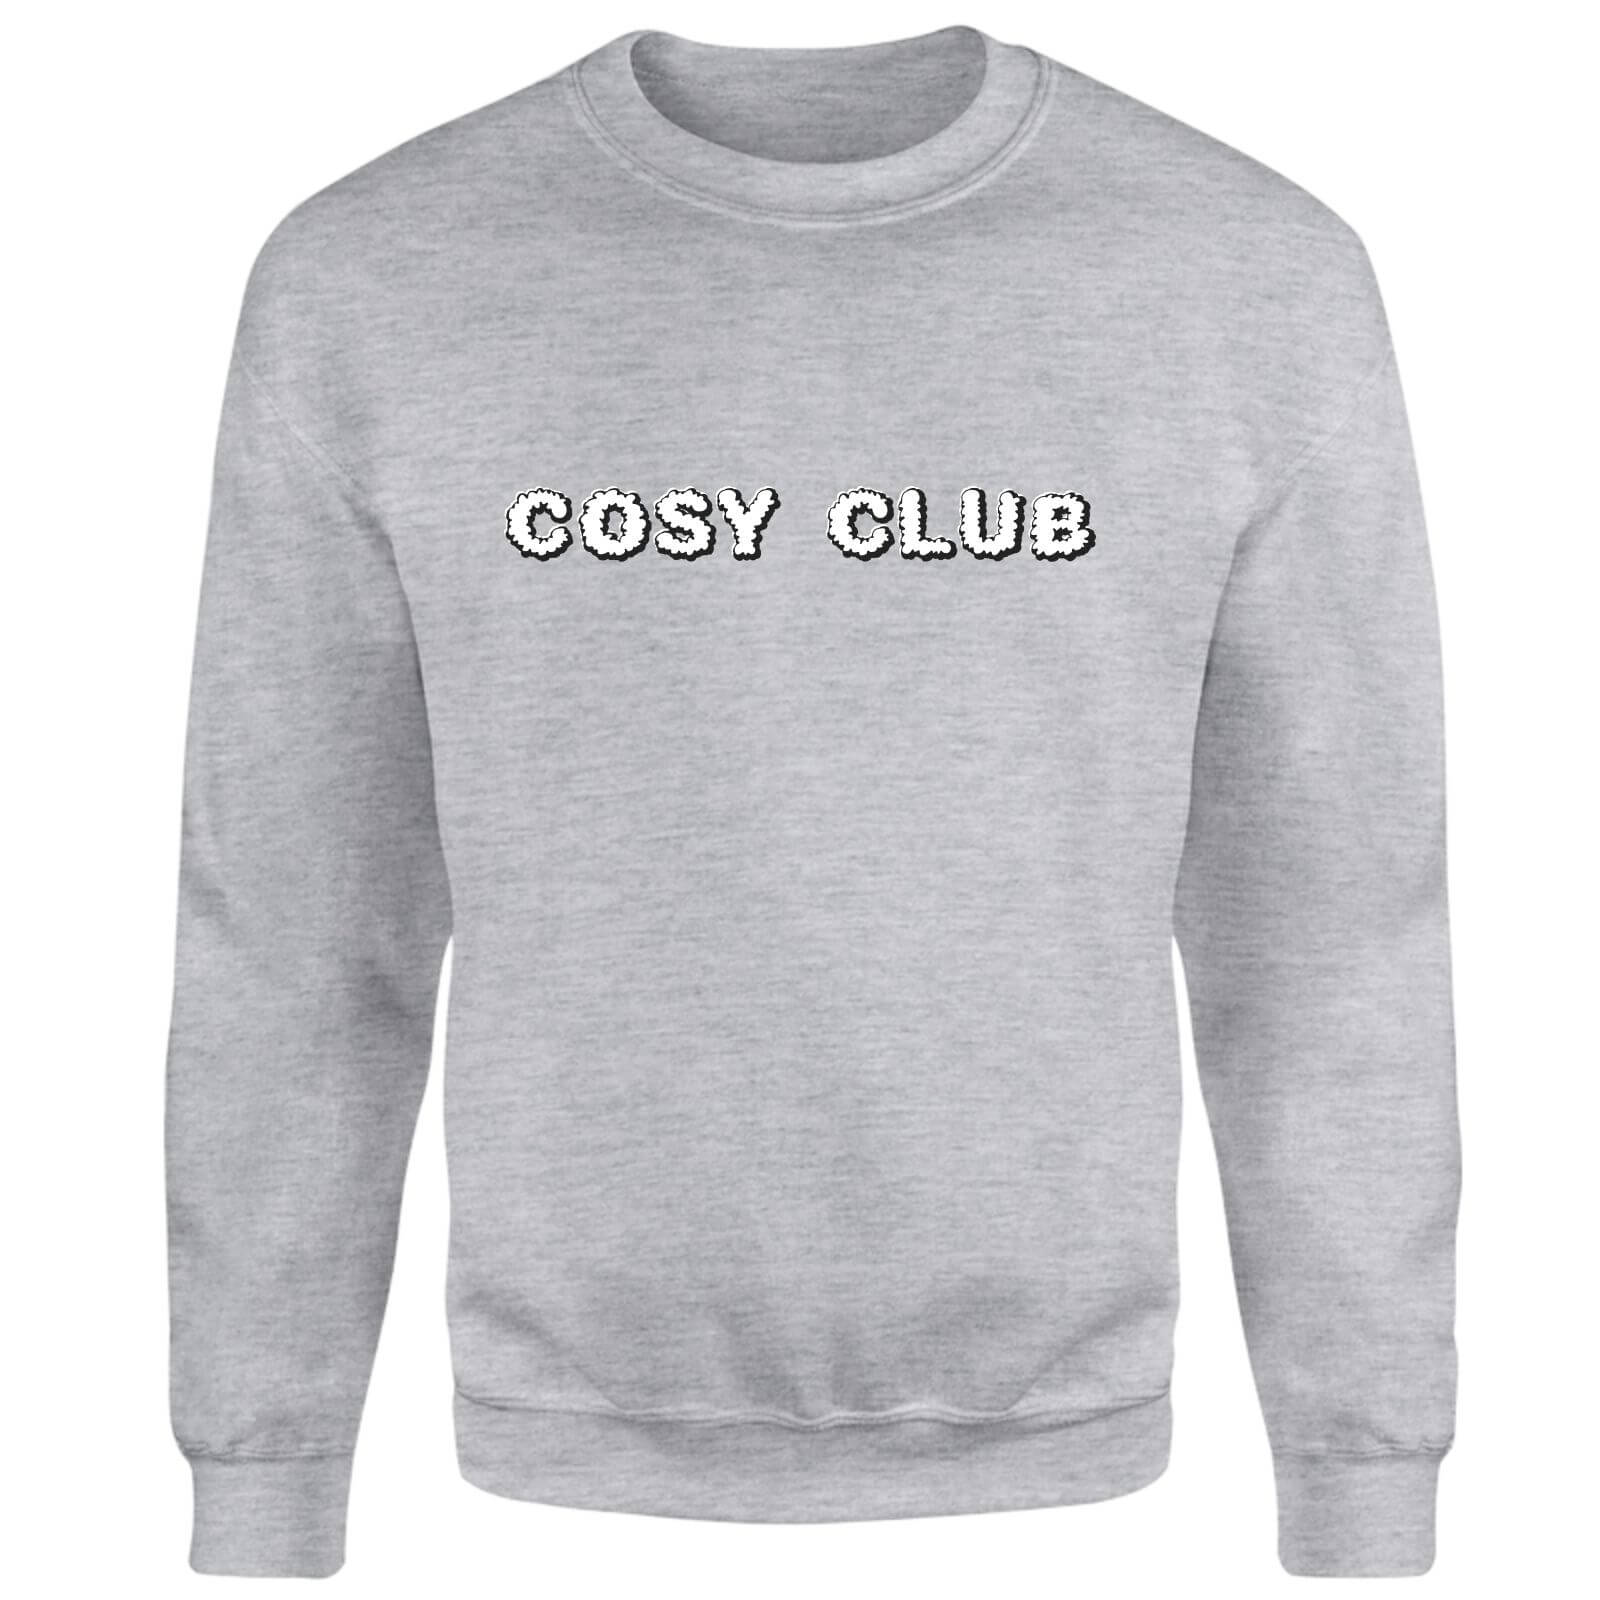 Cosy Club Dark Sweatshirt - Grey - XS - Grey